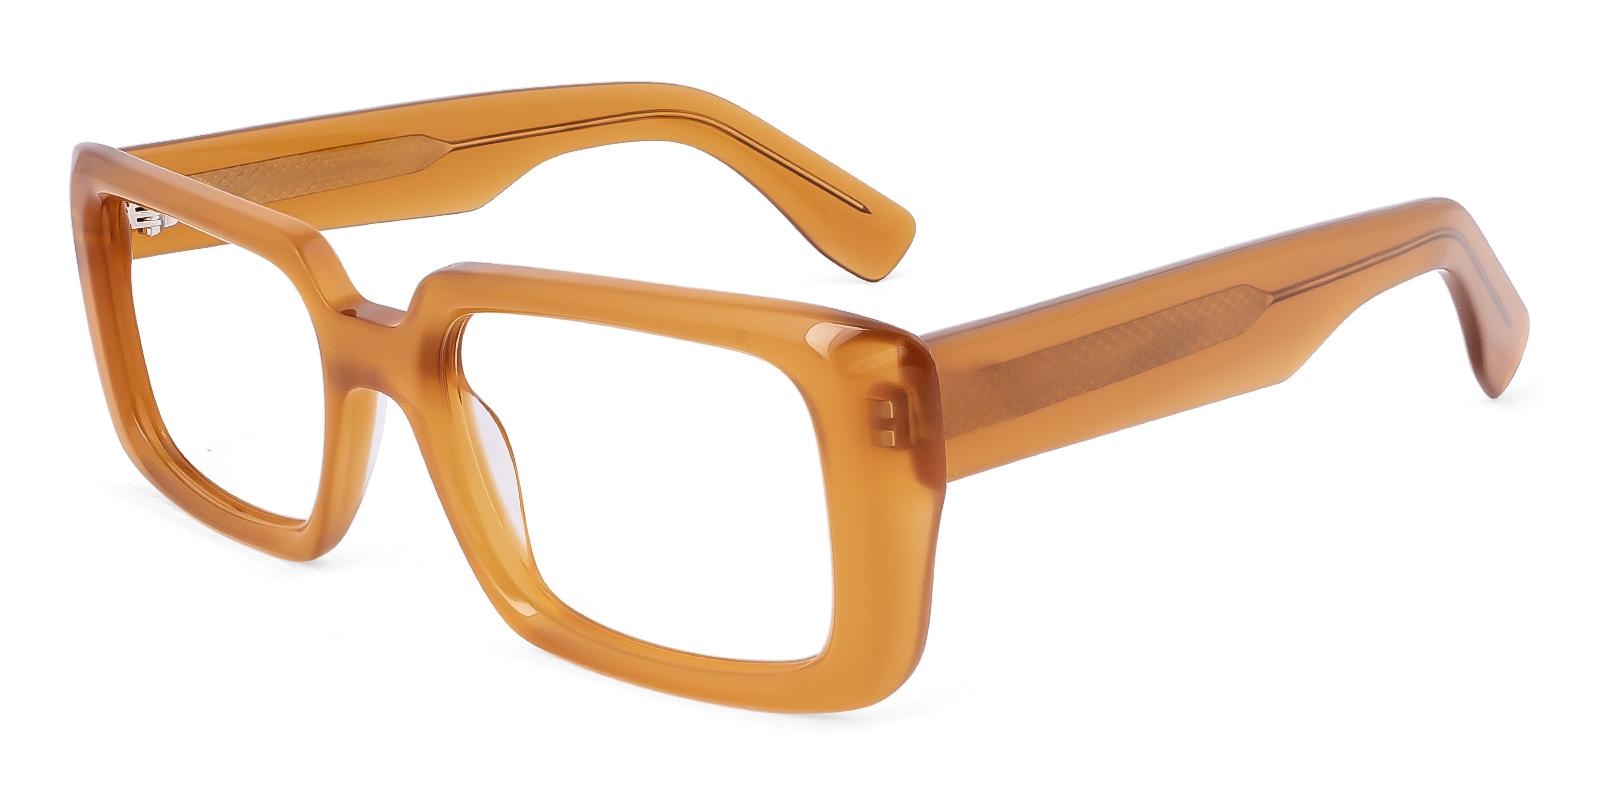 Stateture Brown Acetate Eyeglasses , UniversalBridgeFit Frames from ABBE Glasses